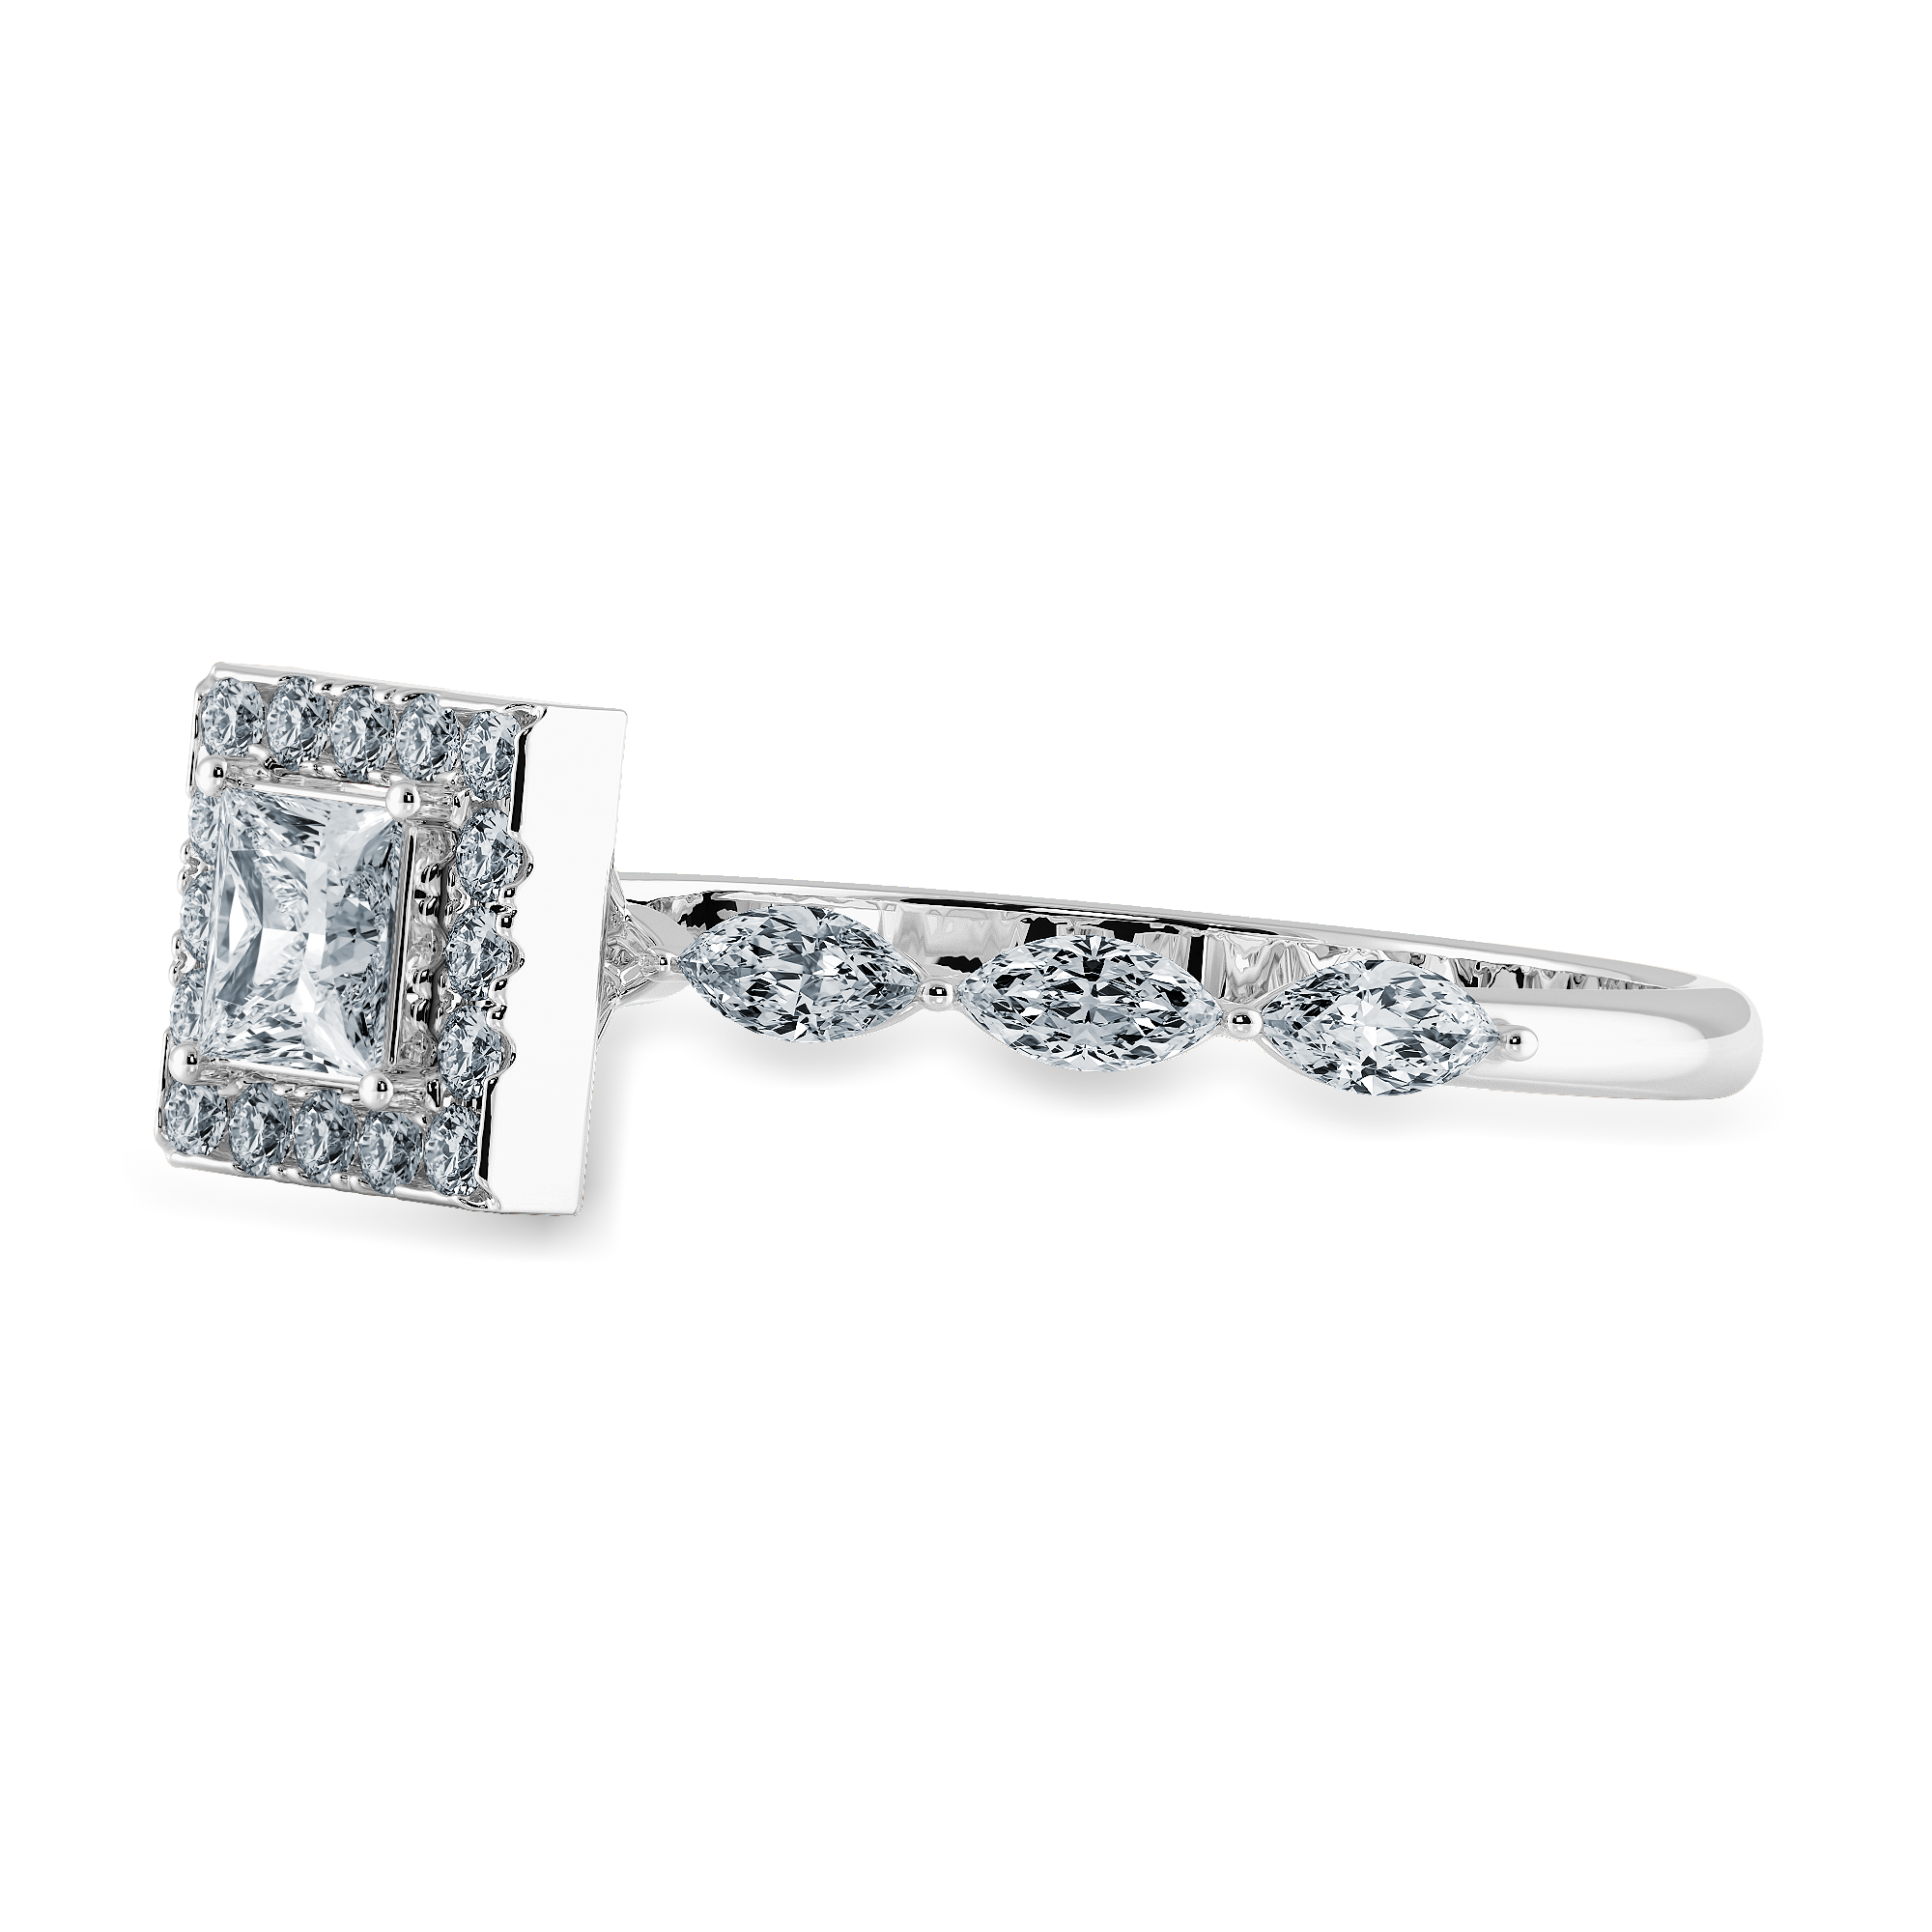 1-Carat Princess Cut Solitaire Halo Diamond with Marquise Cut Diamond Accents Platinum Ring JL PT 1277-C   Jewelove.US